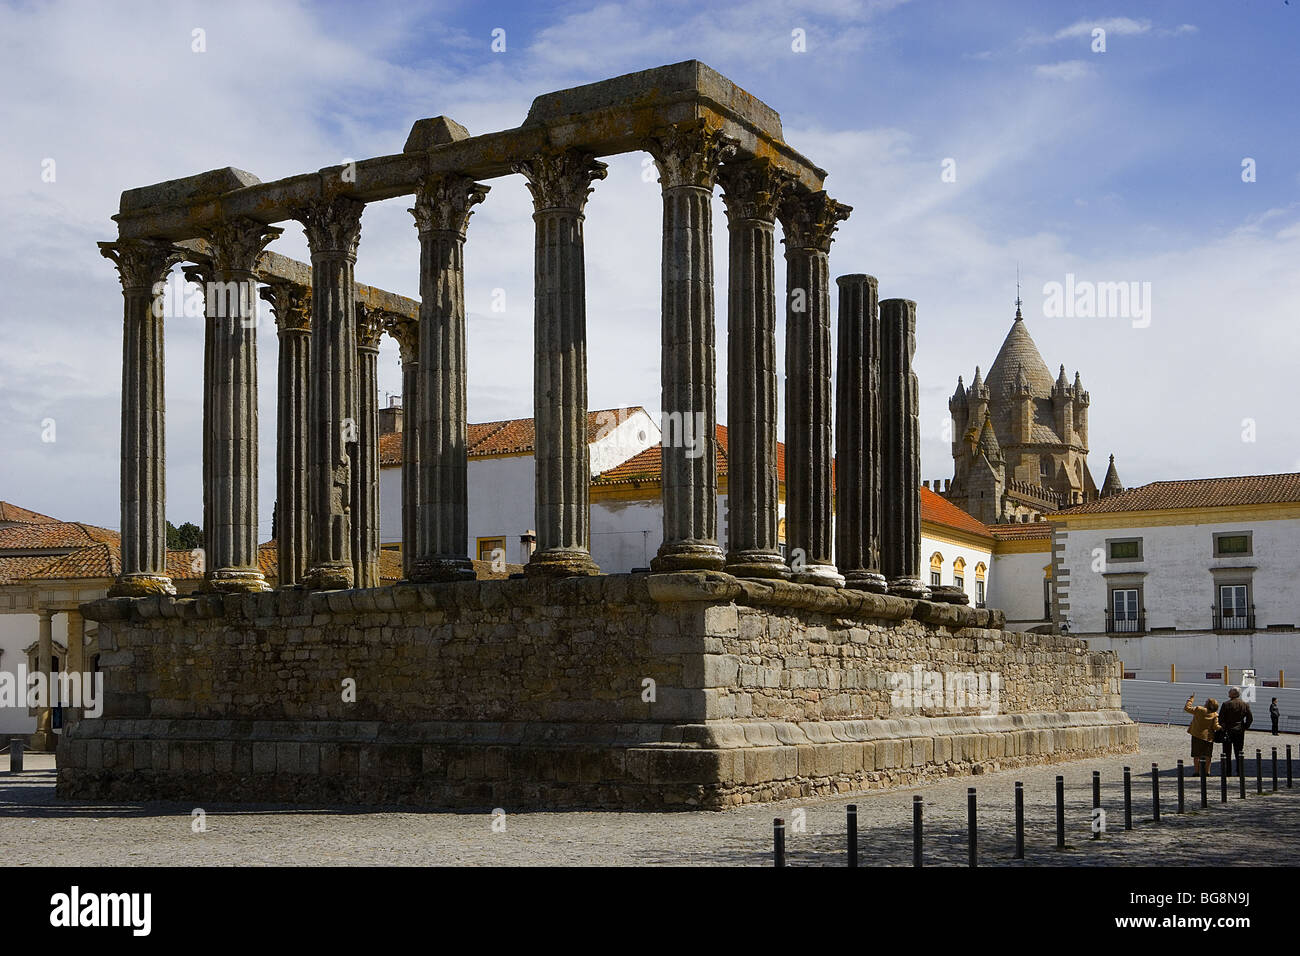 Roman temple. Colonnade with Corinthian capitals. Evora. Portugal. Stock Photo